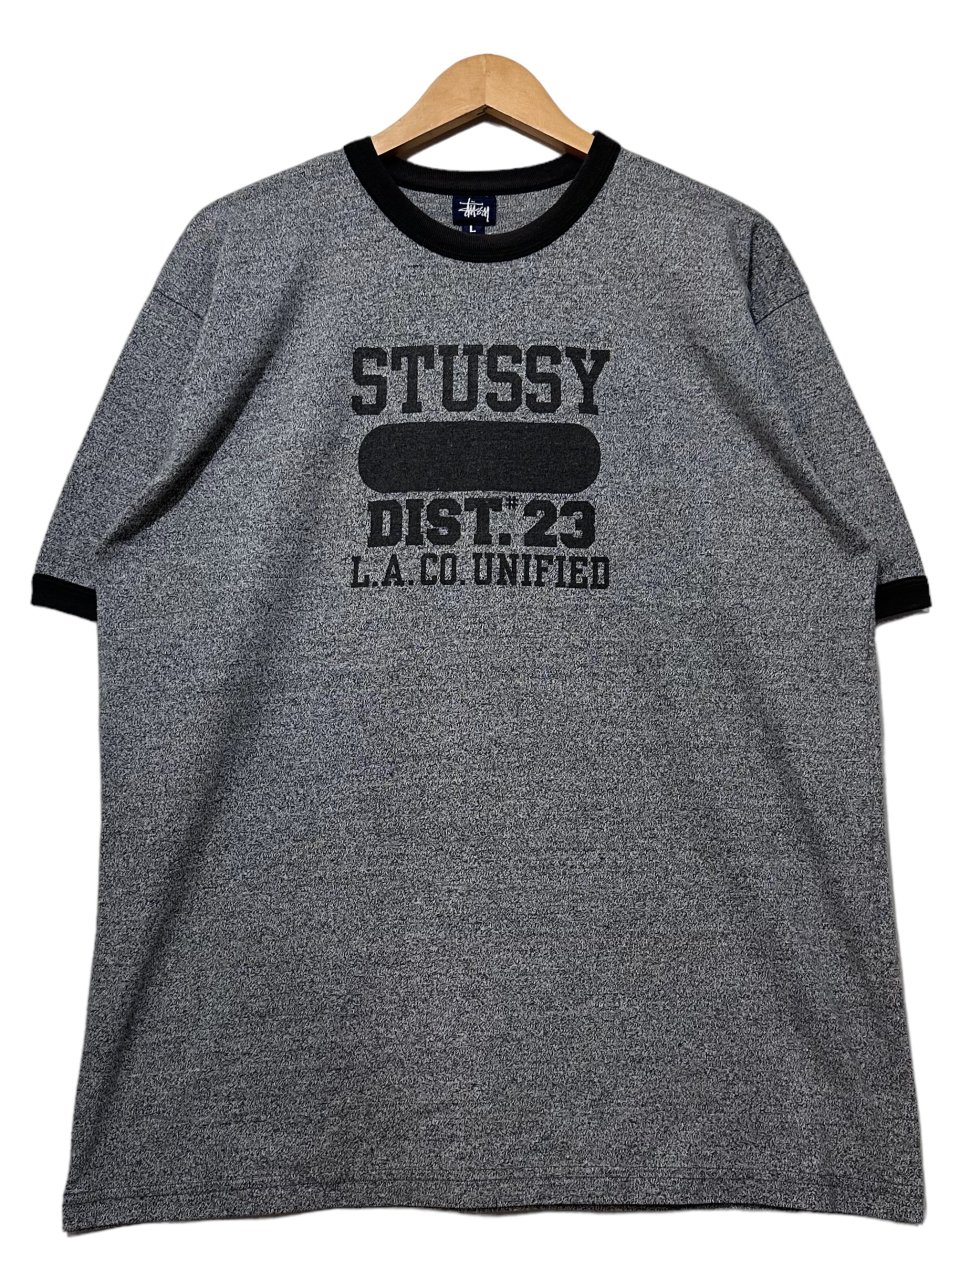 90s old stussy tee オールド ステューシー Tシャツ